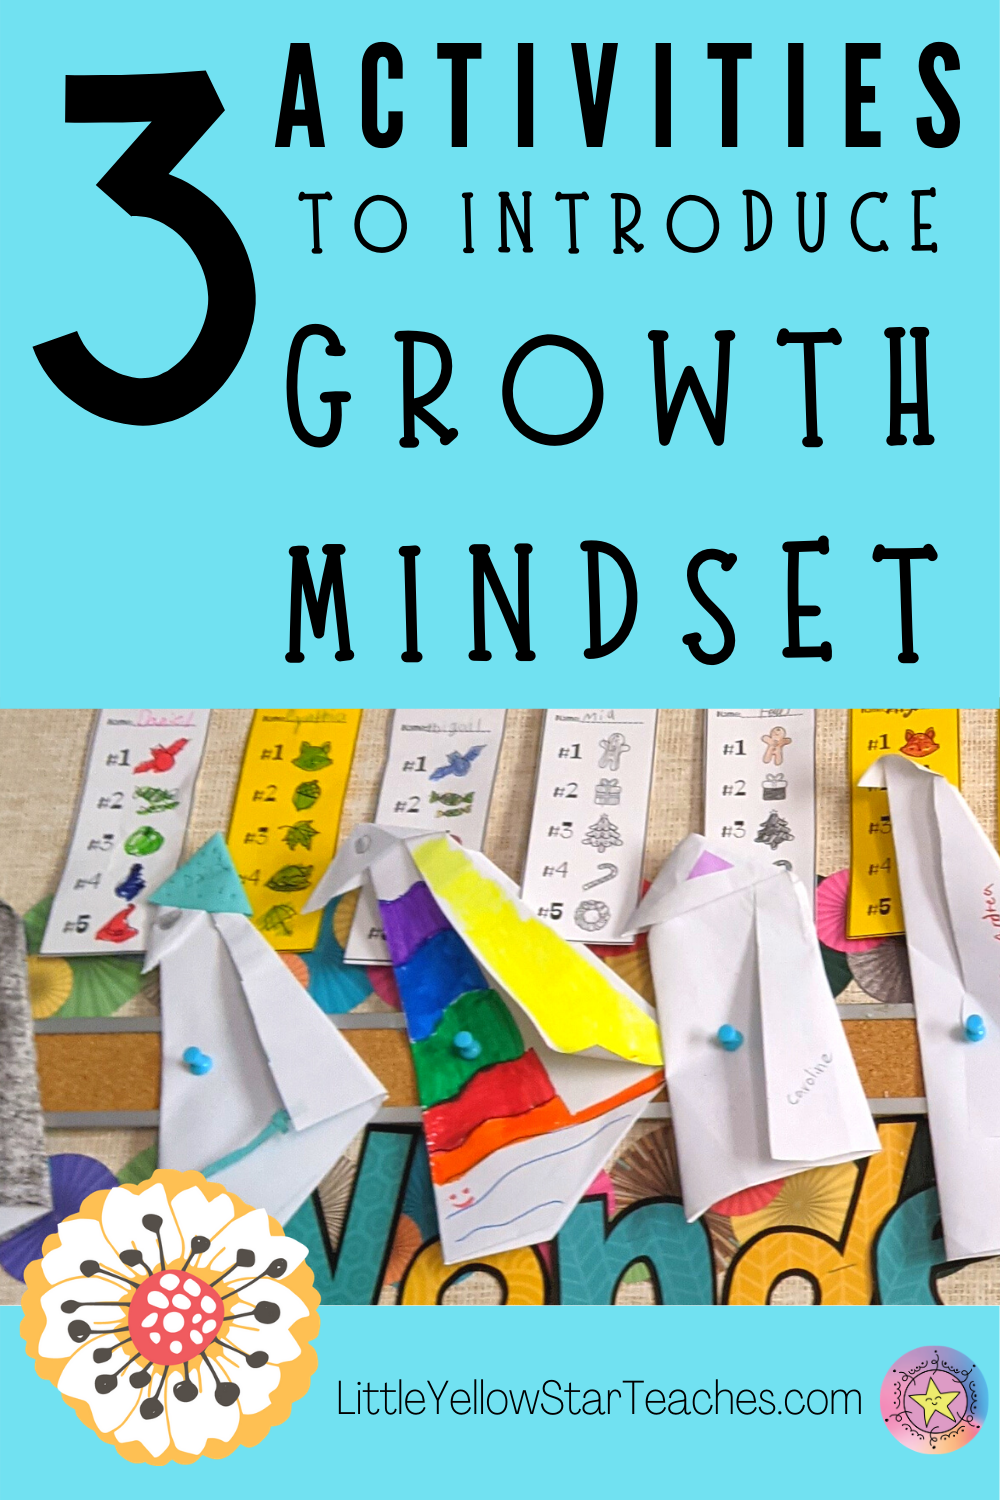 3 Activities To Introduce Growth Mindset